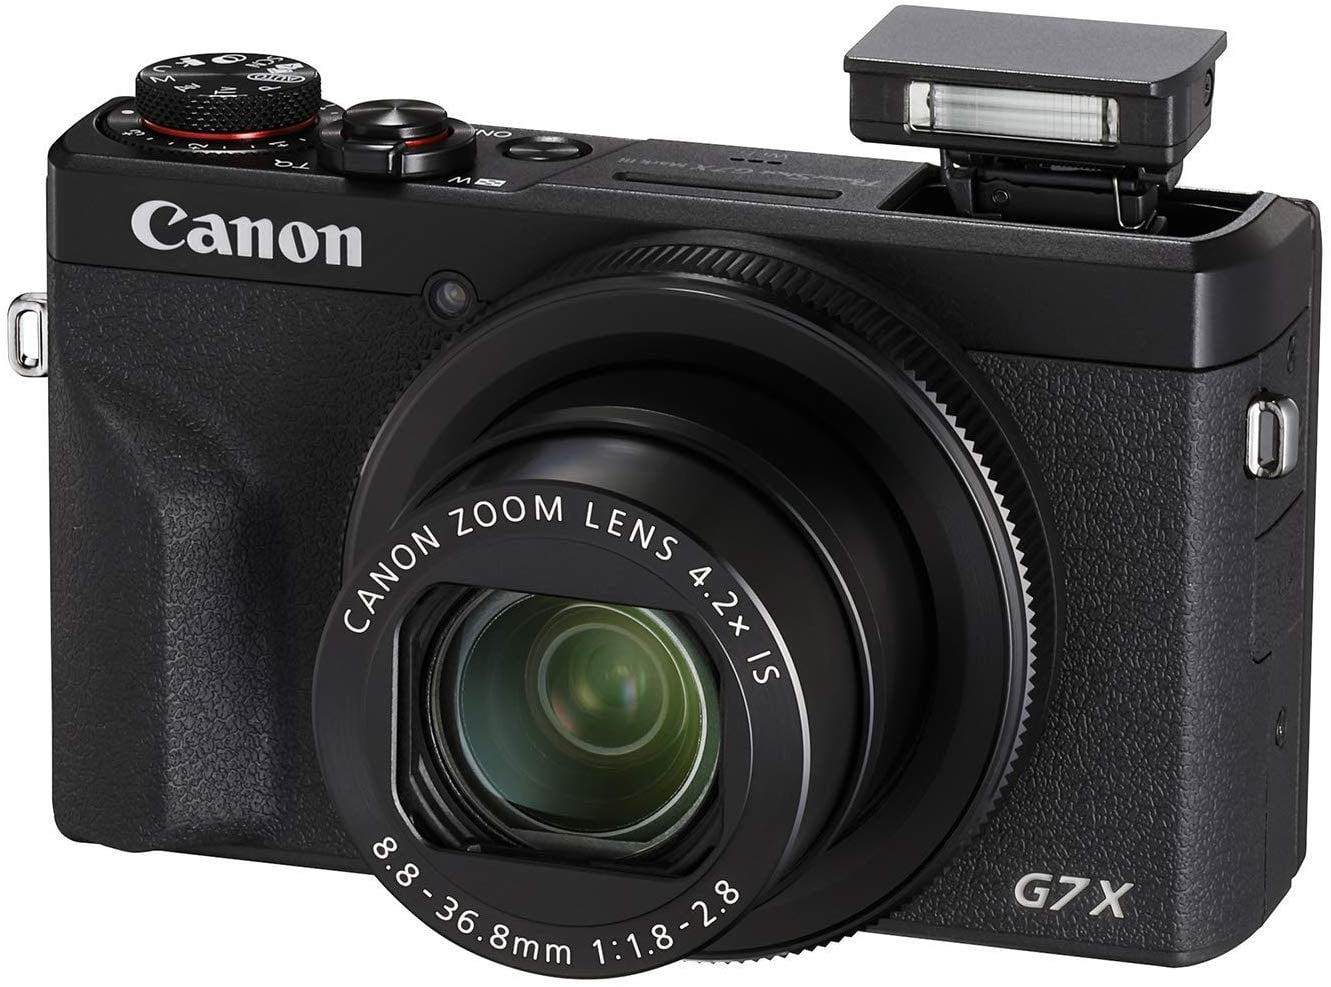 Restored Canon PowerShot Digital Camera [G7 X Mark III] with WiFi